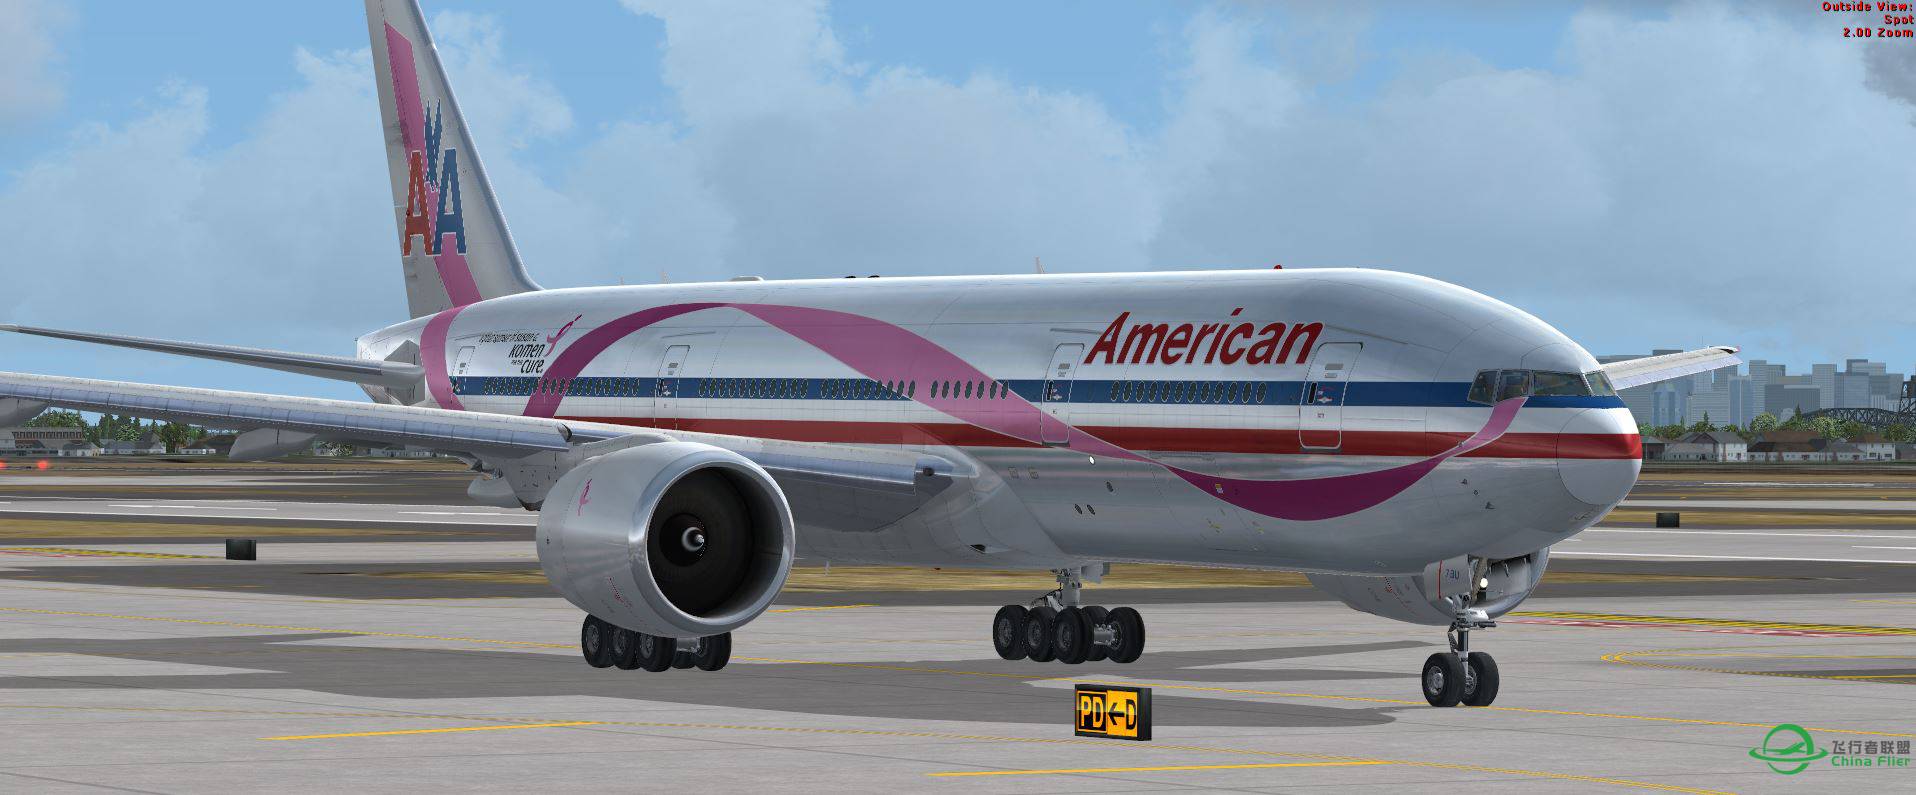 B777 American Airline-7894 